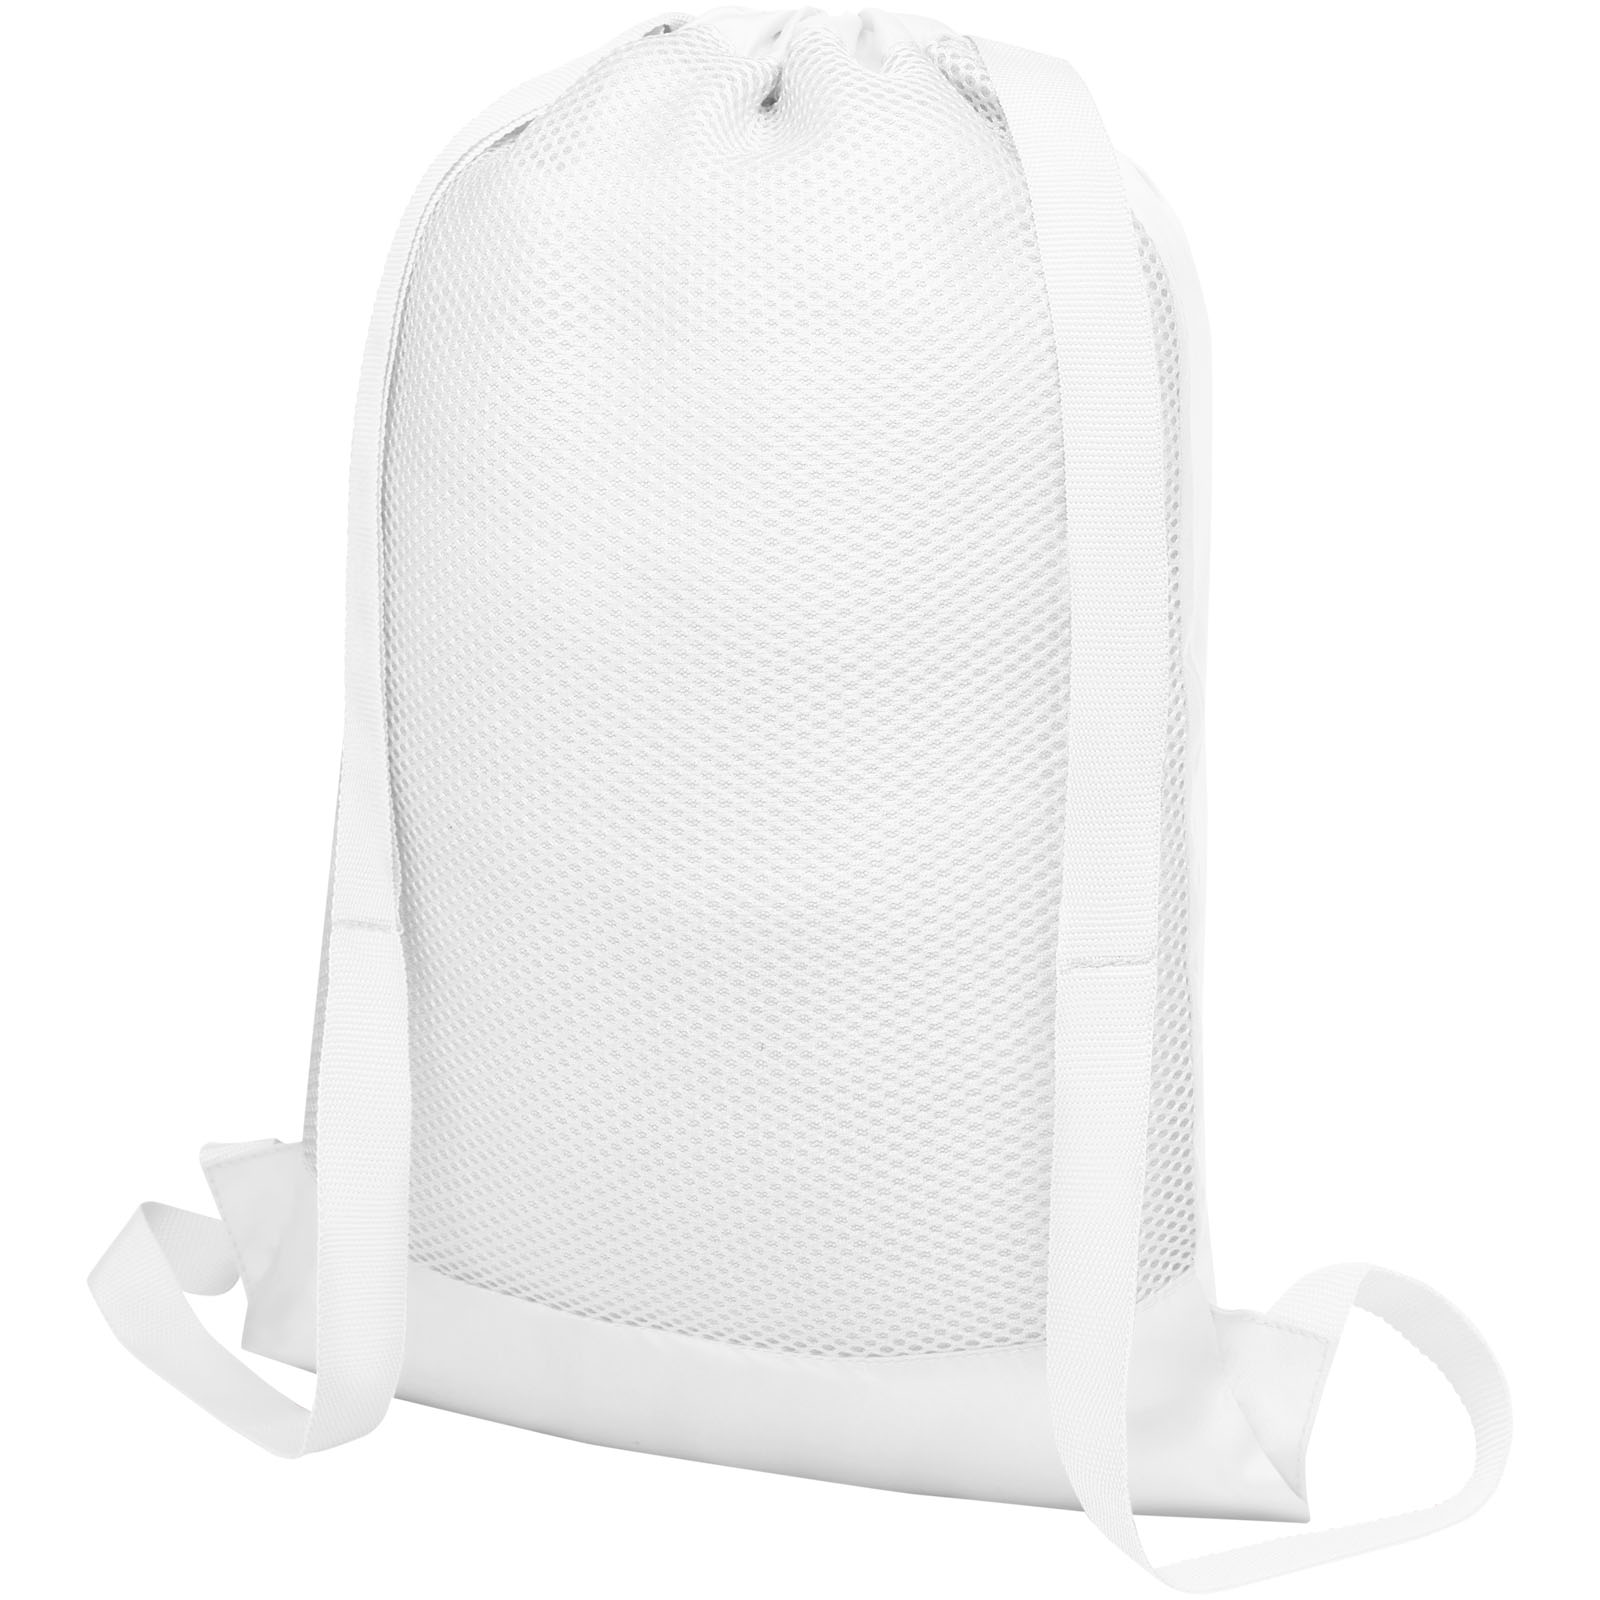 Drawstring Bags - Nadi mesh drawstring backpack 5L